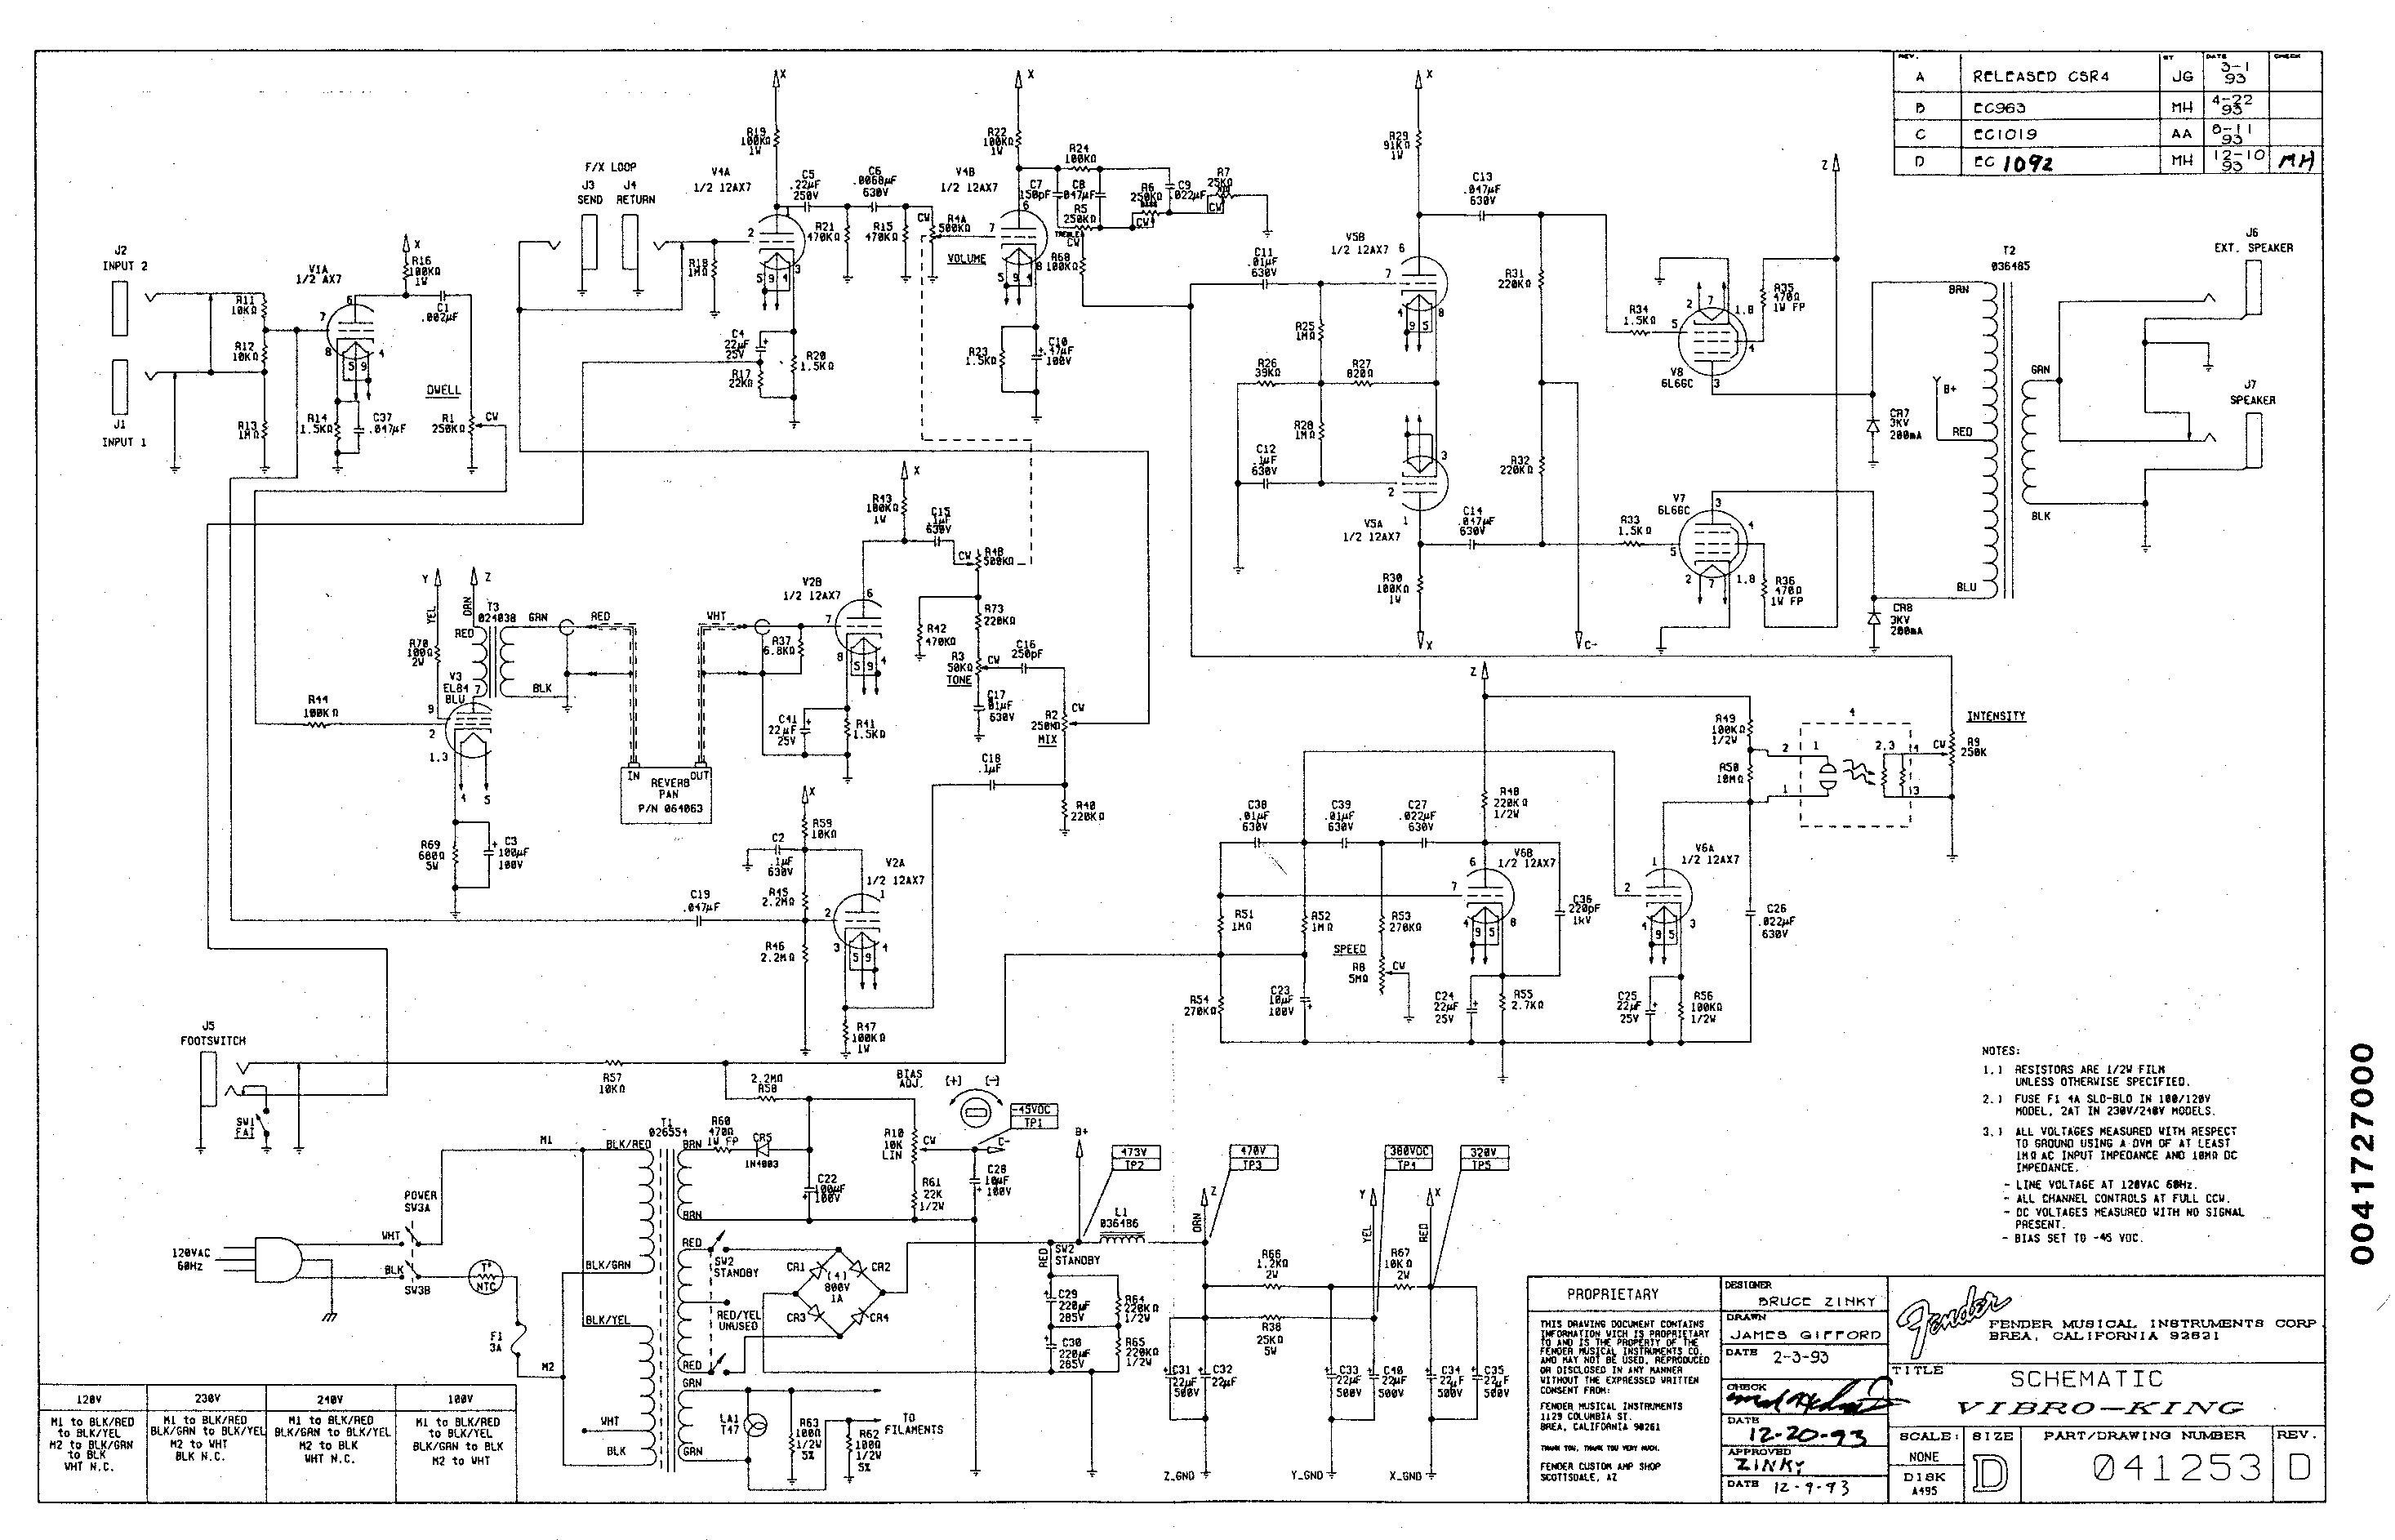 Guitar Wiring Diagram Creator Inspirationa Free Electrical Diagram Software Inspirational Blue Guitar